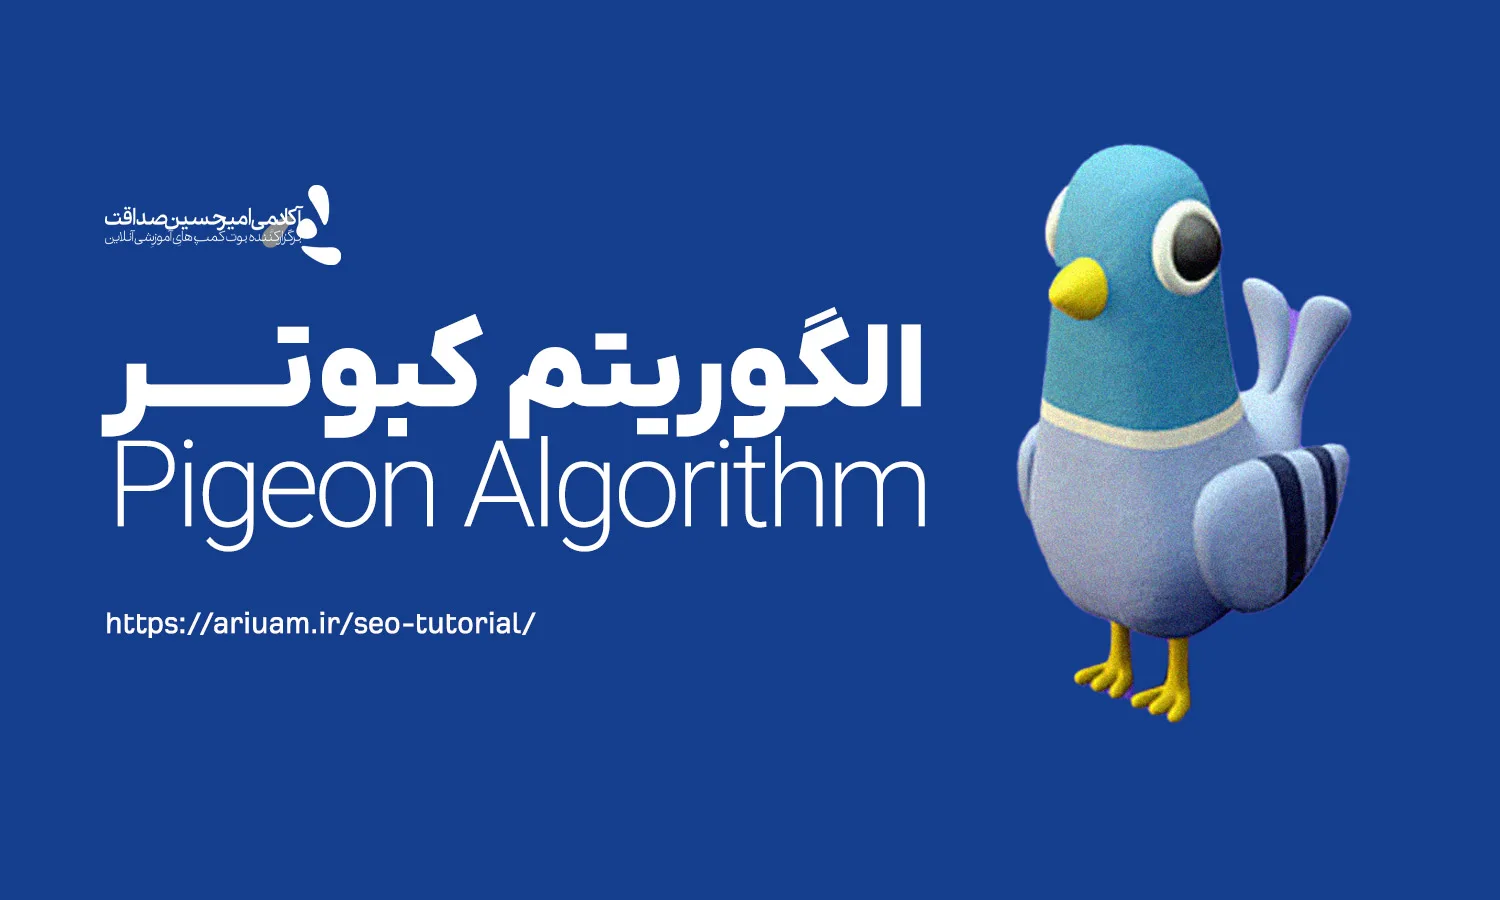 الگوریتم کبوتر (Pigeon Algorithm)